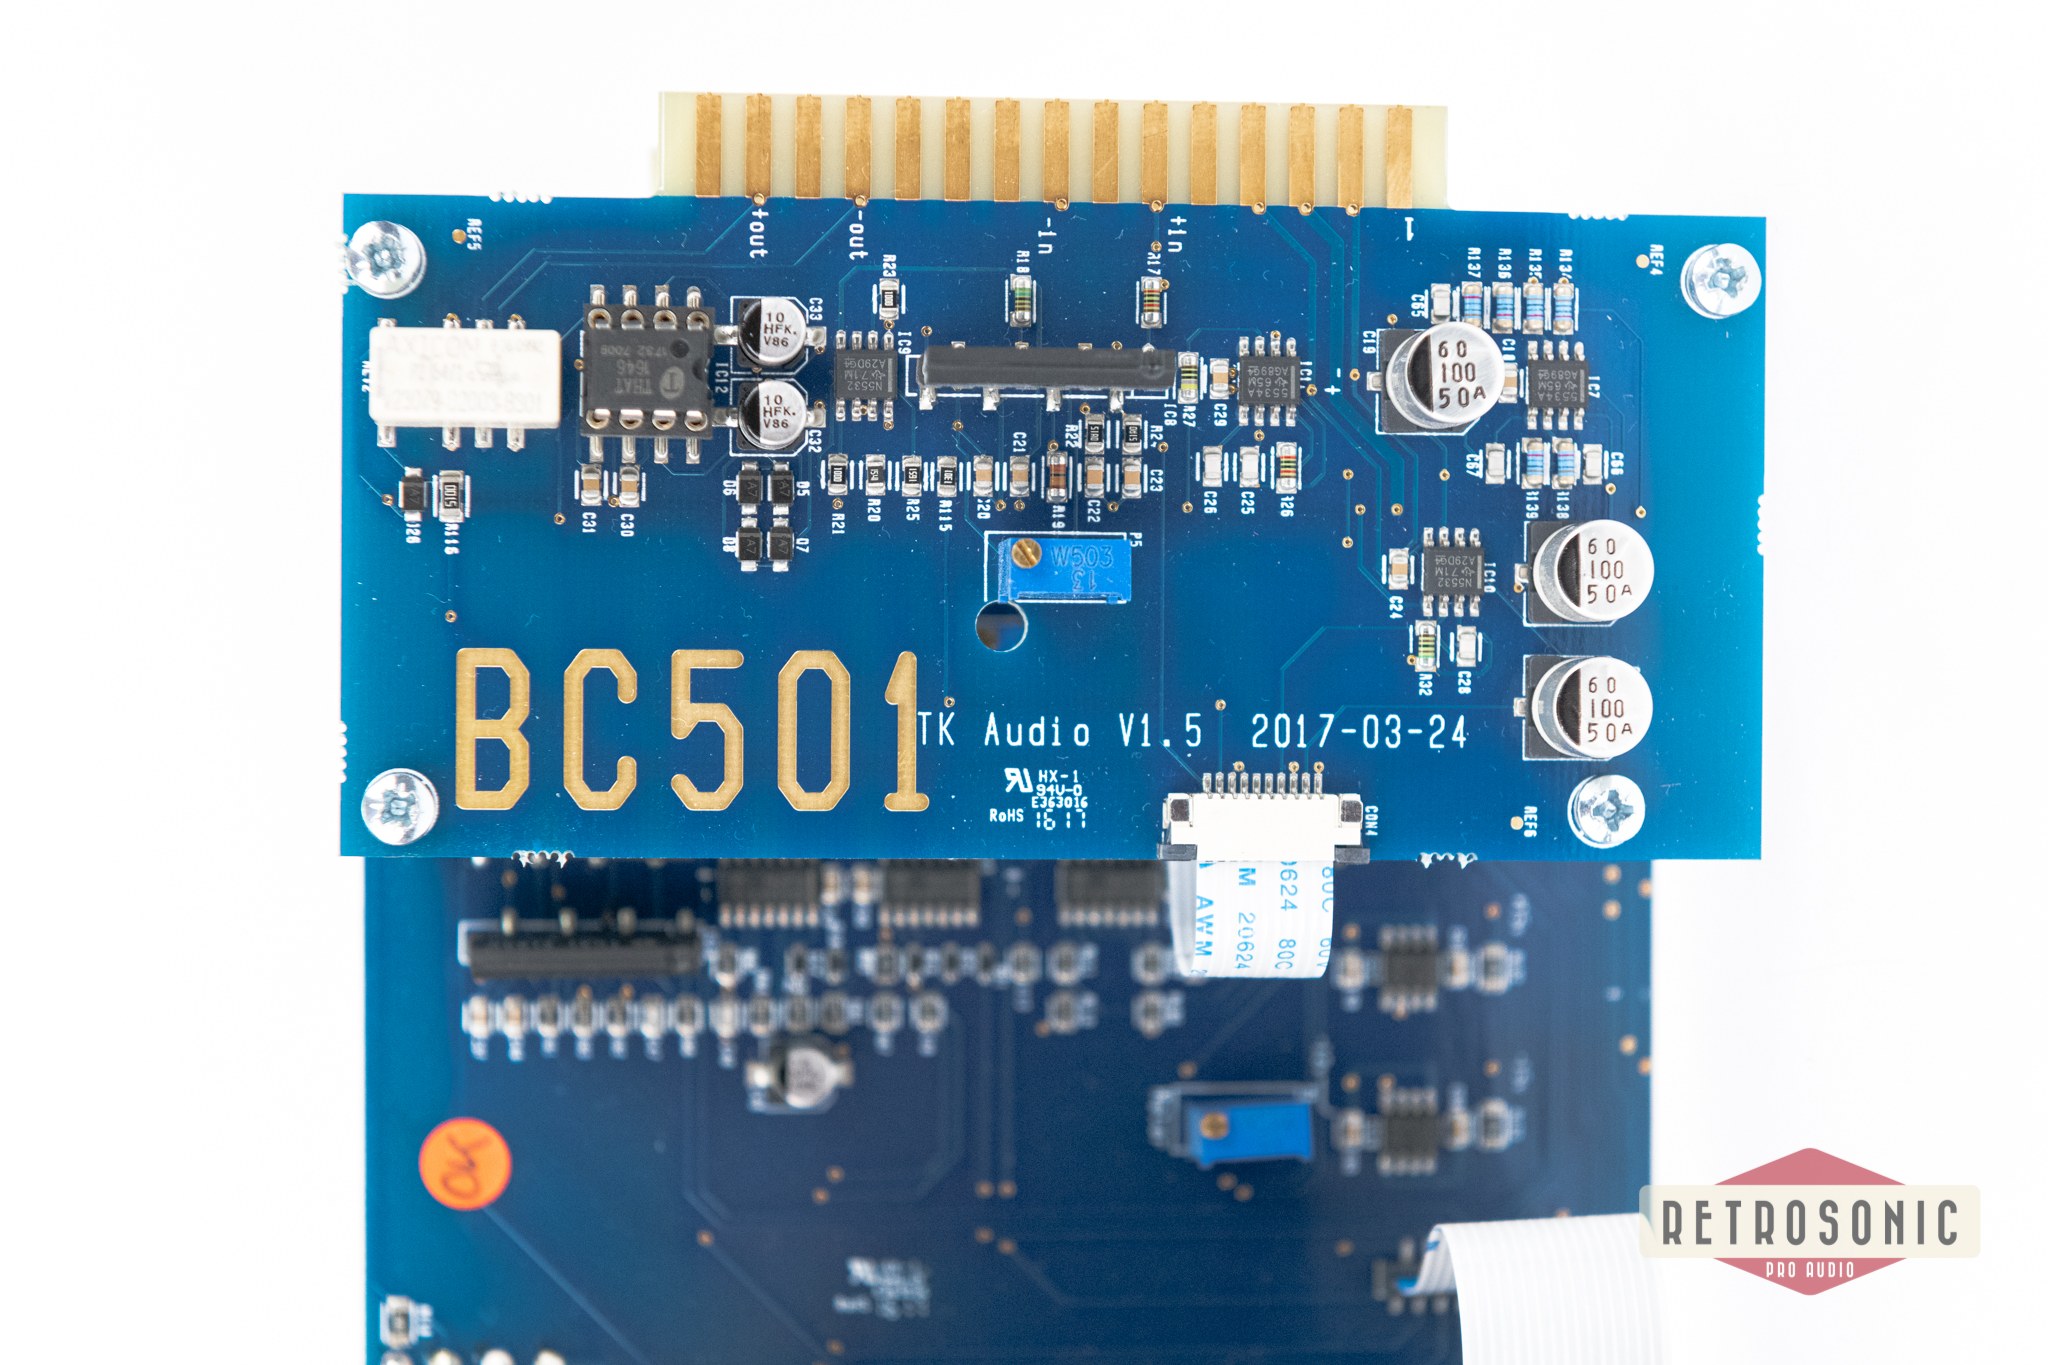 TK-Audio BC501